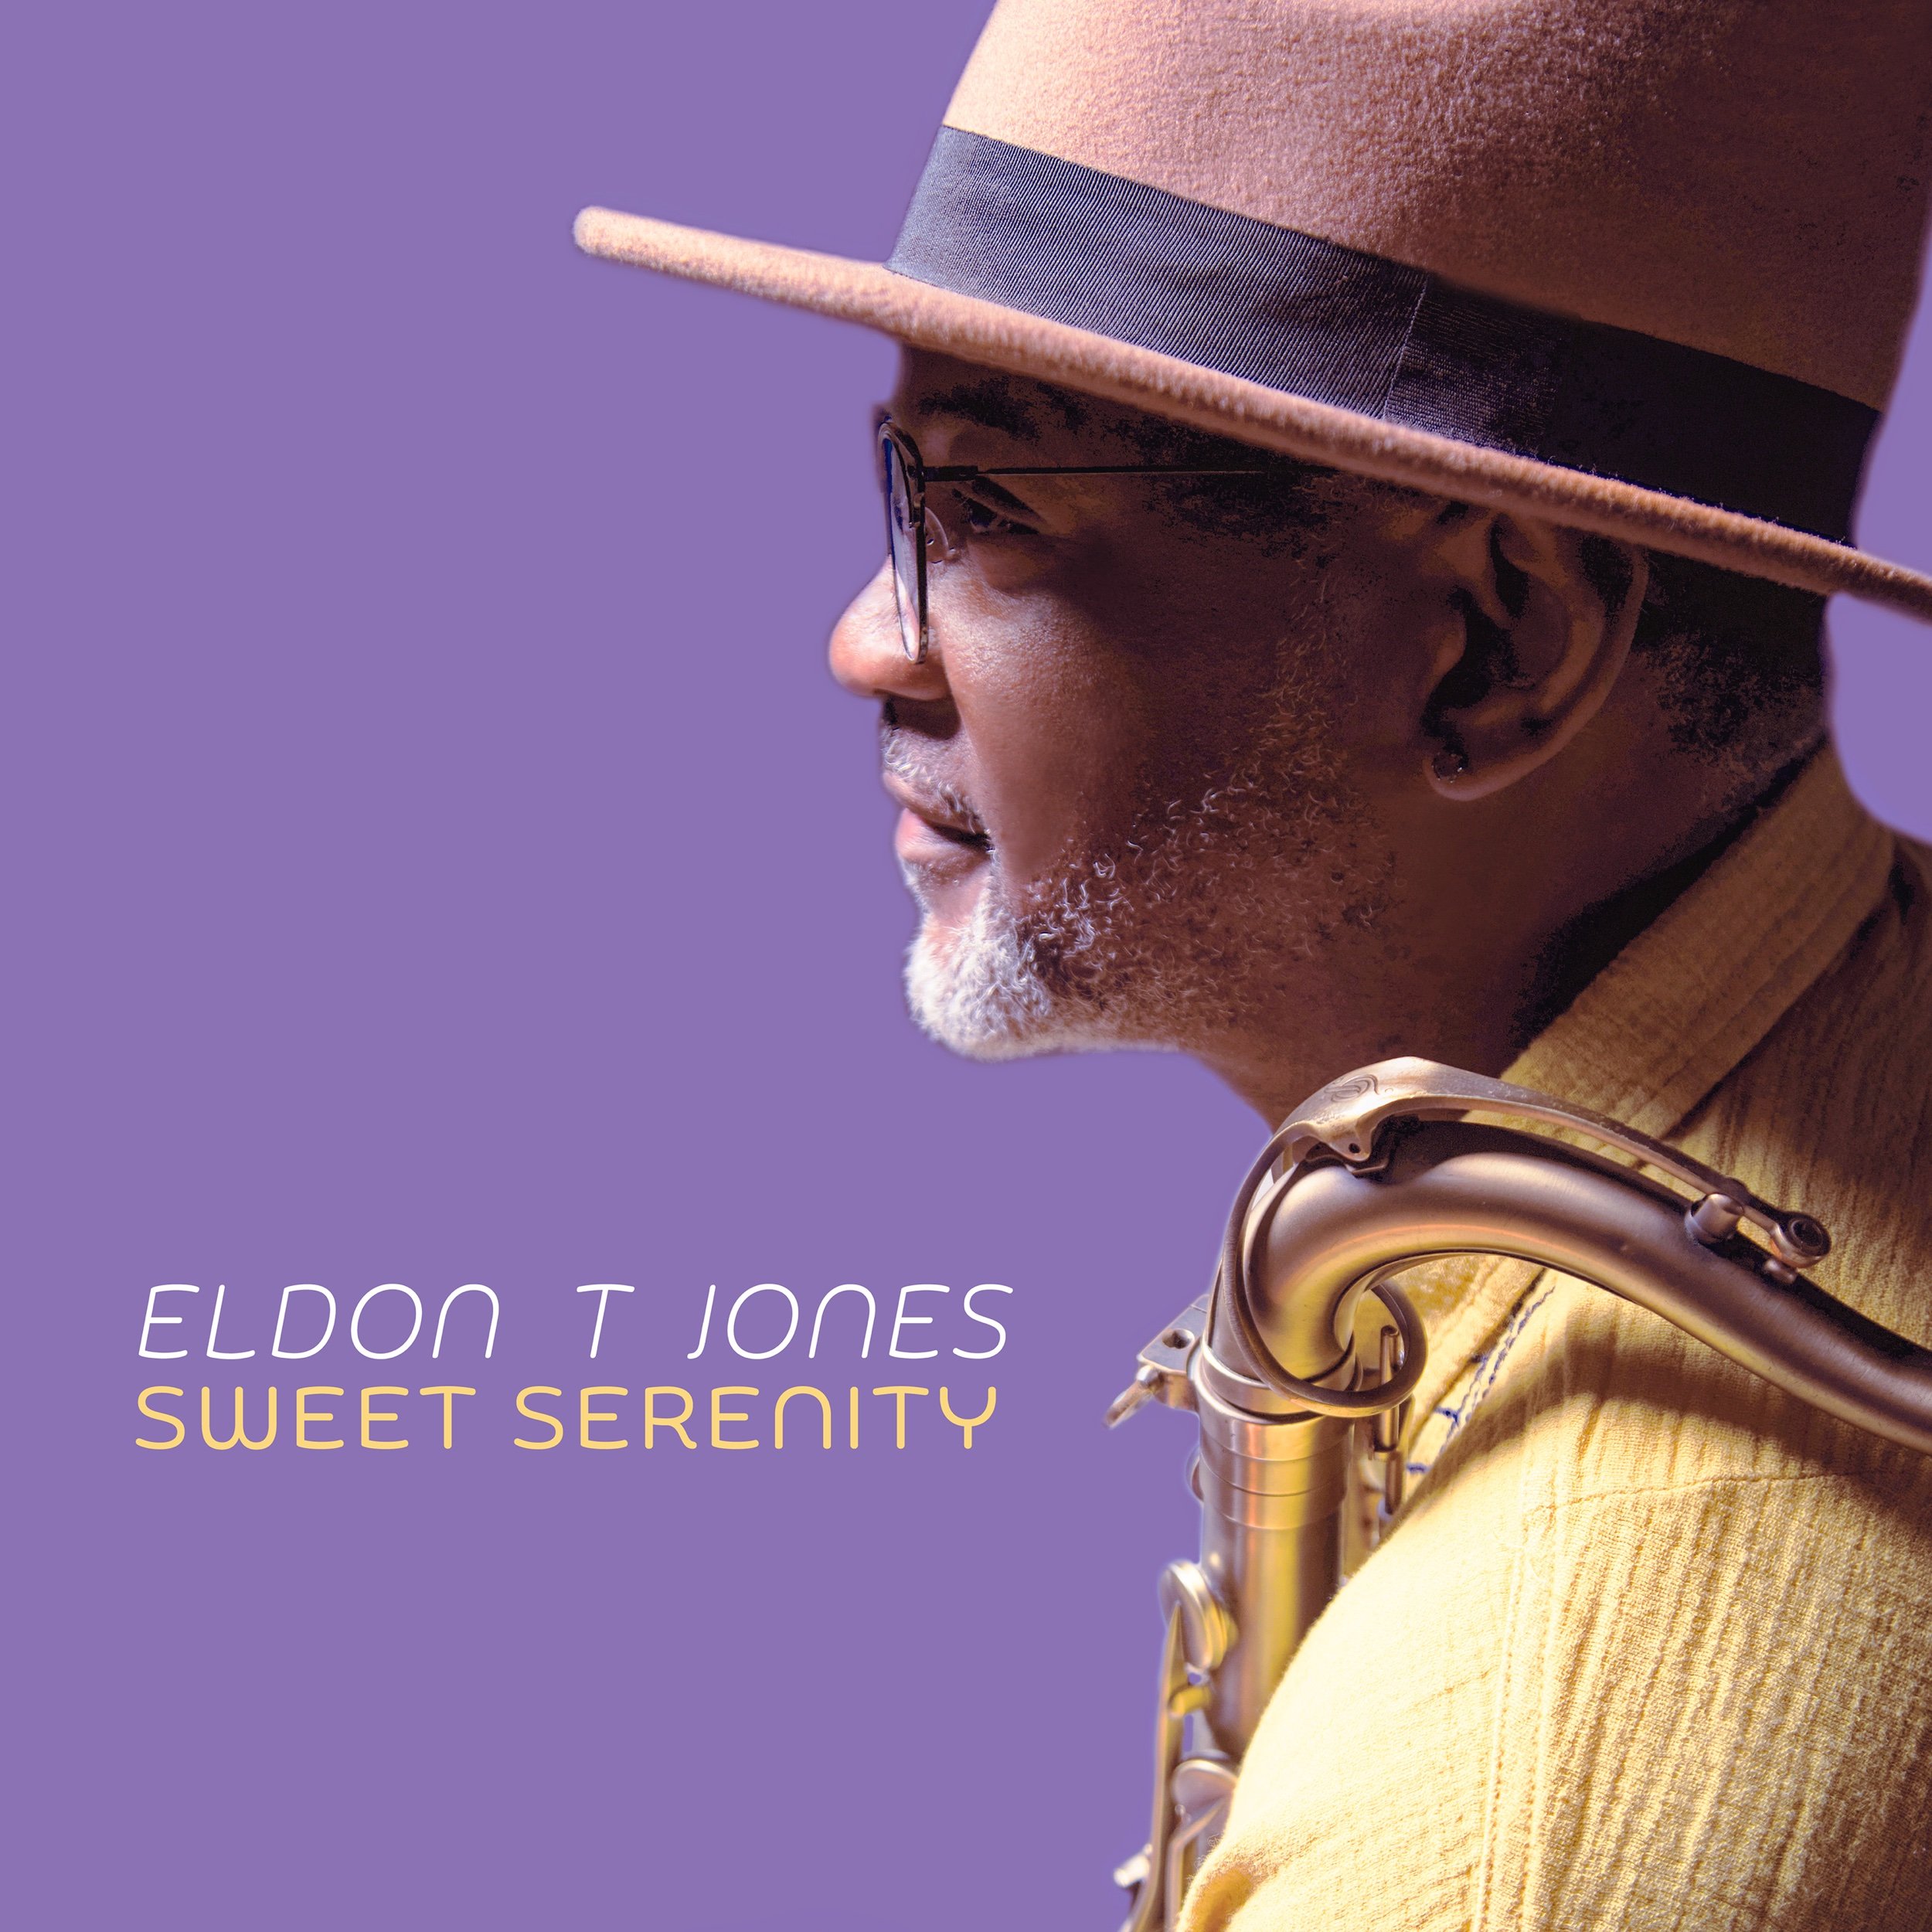 Eldon T Jones “Sweet Serenity” Single